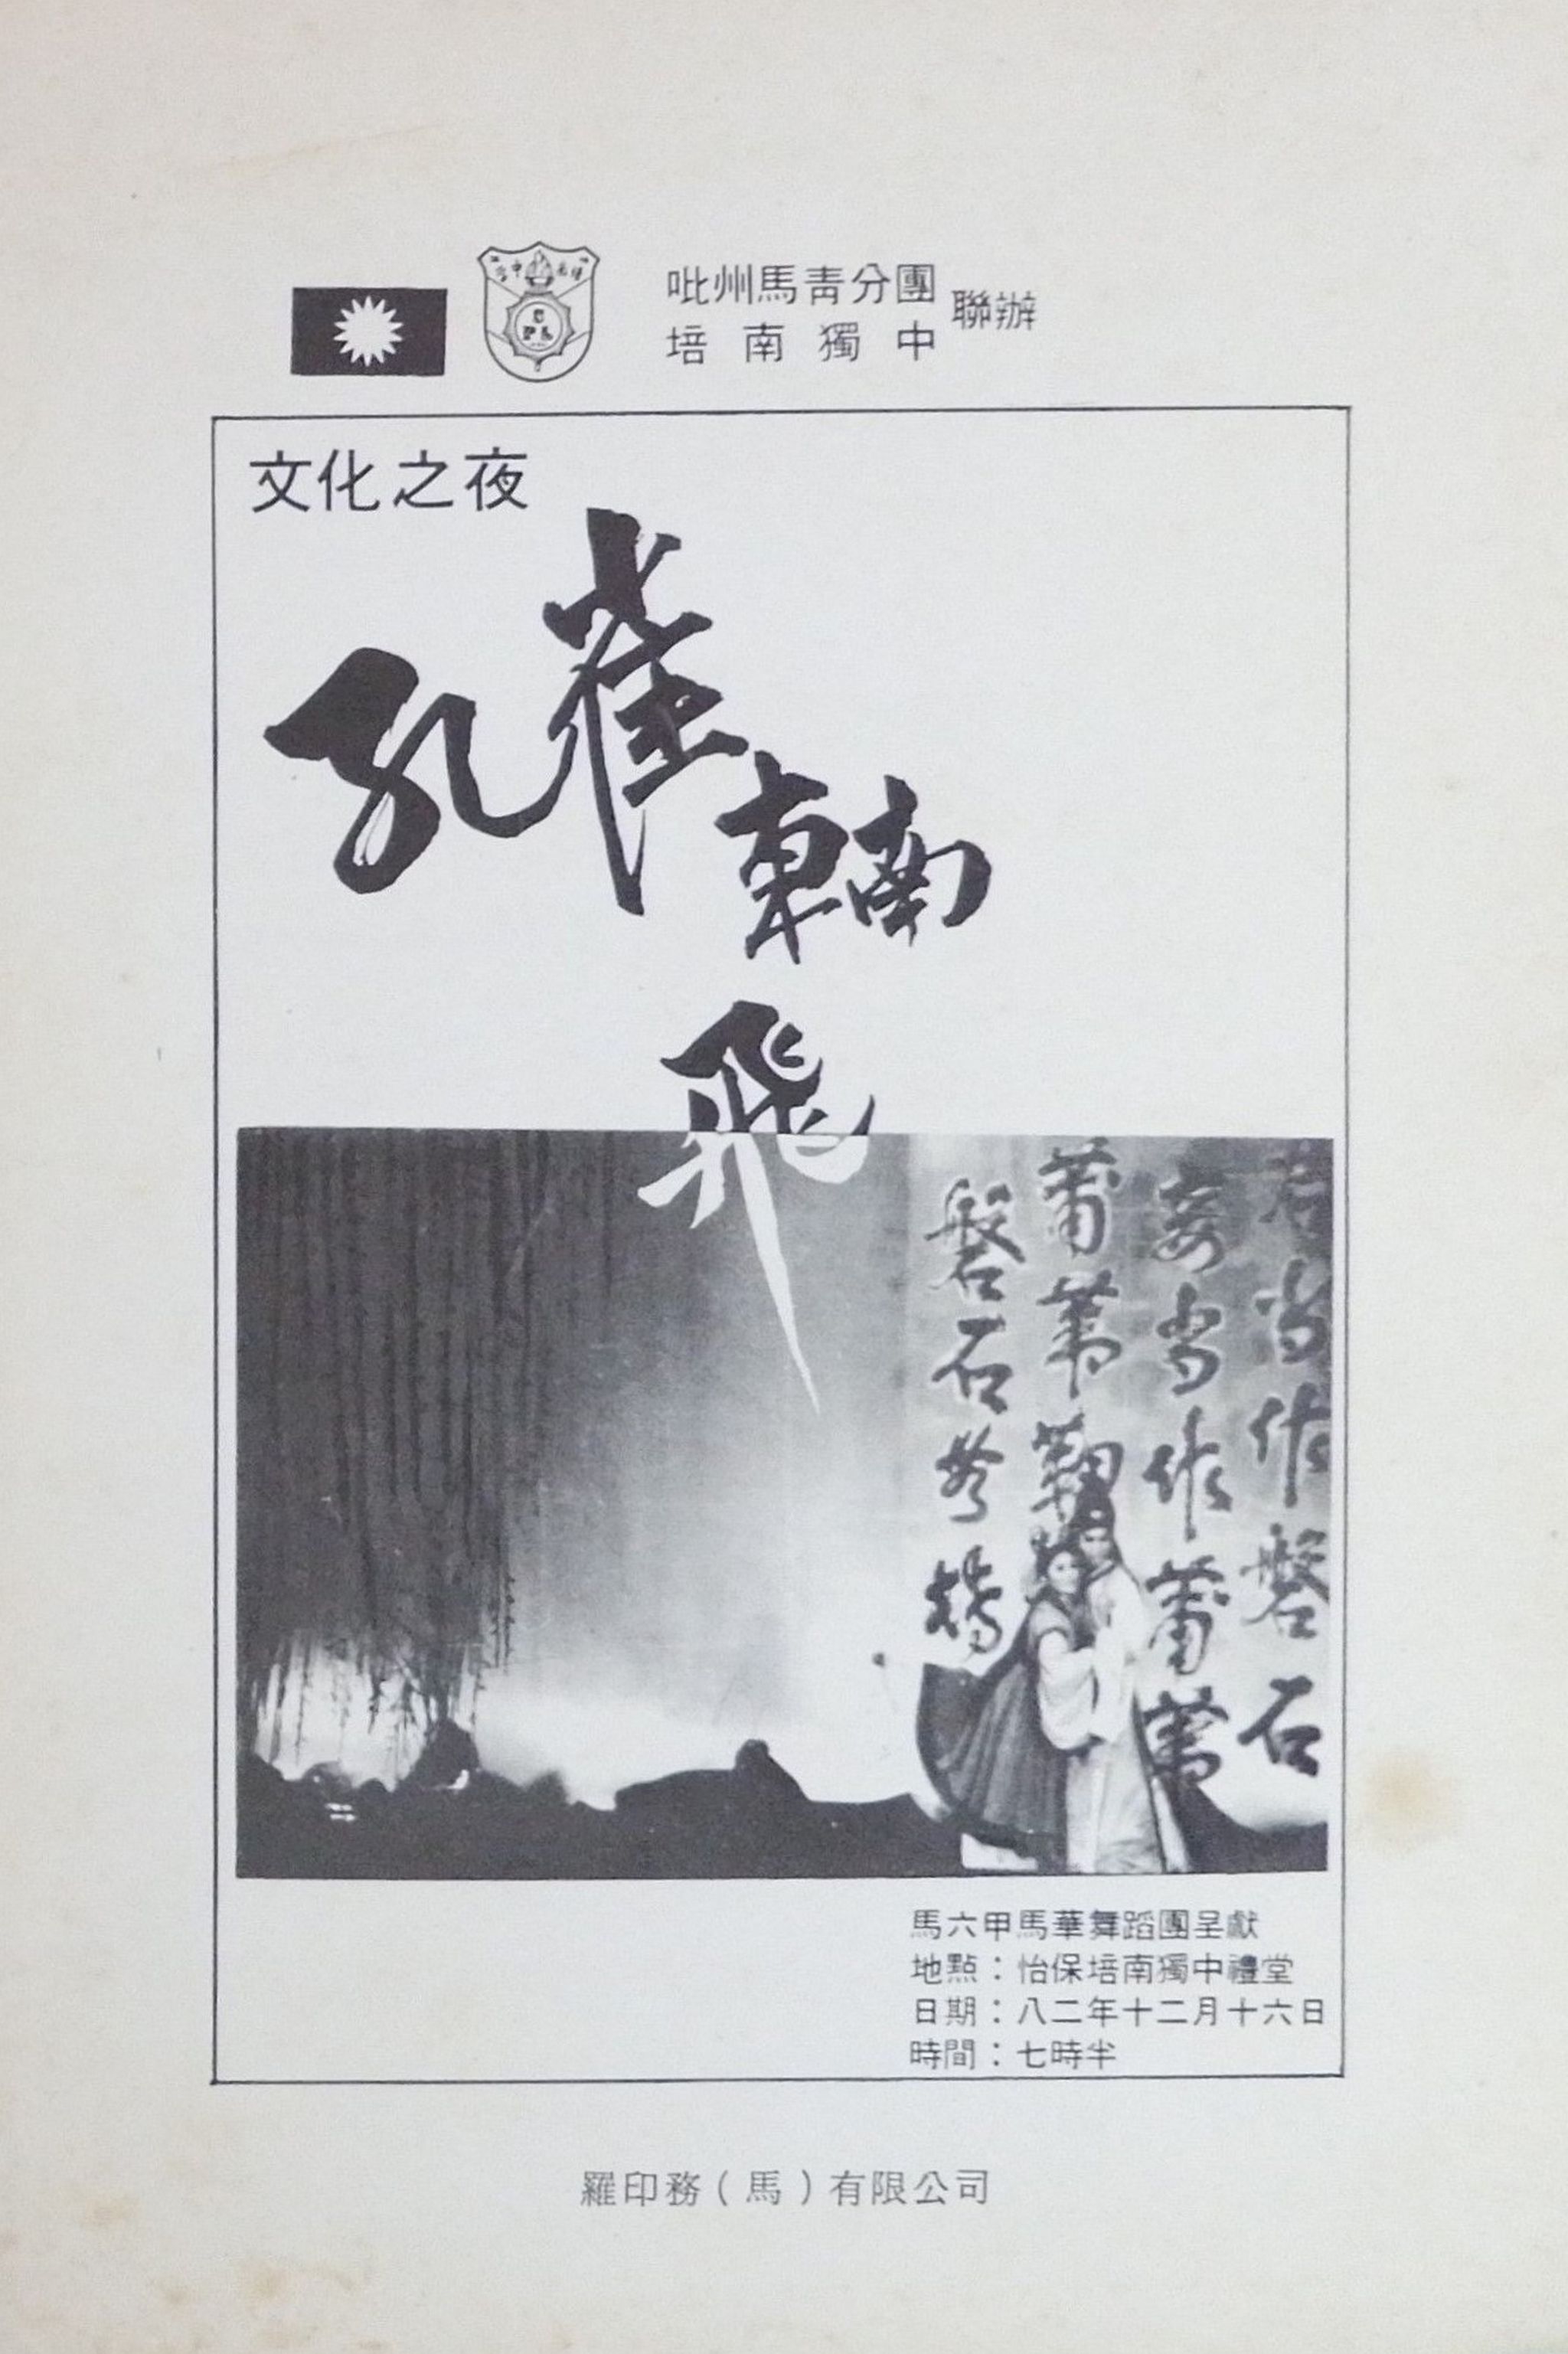 1982 Kong Que Dong Nan Fei Cultural Night Cover